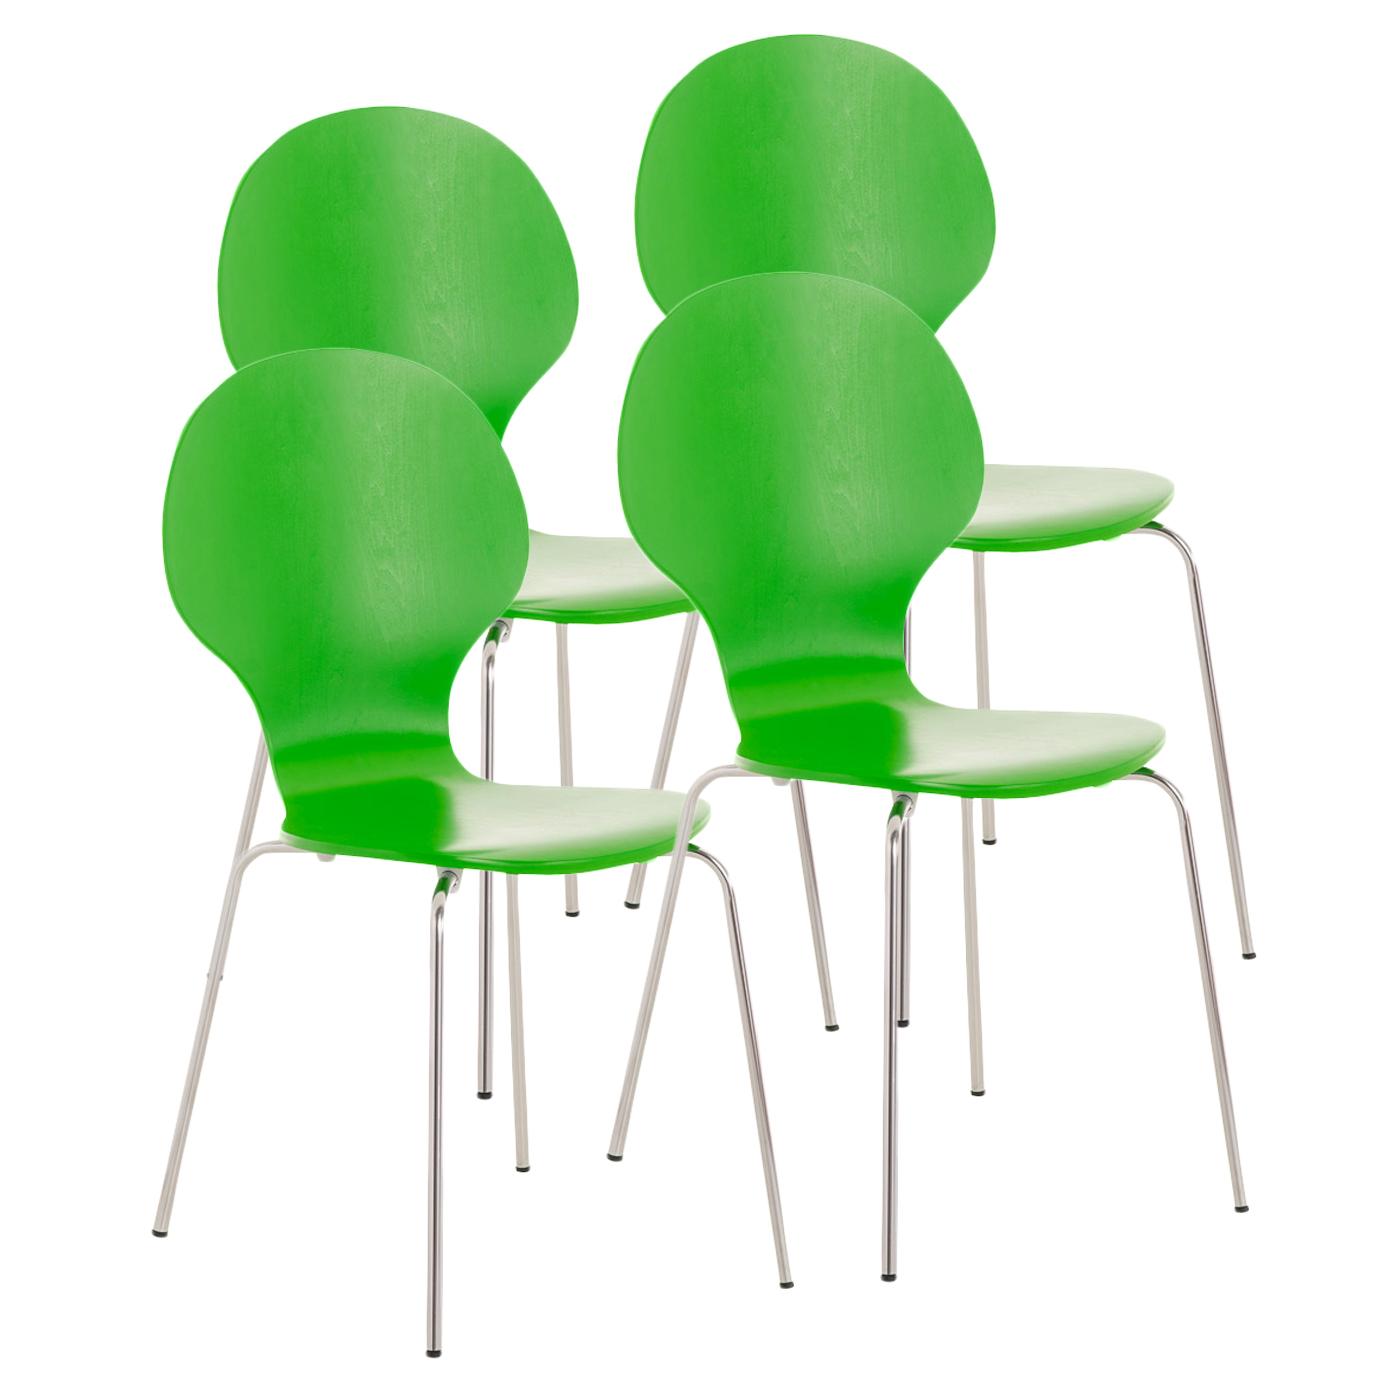 Lote 4 Sillas de Confidente CARVALLO, Estructura Metálica, Apilables, en Color Verde